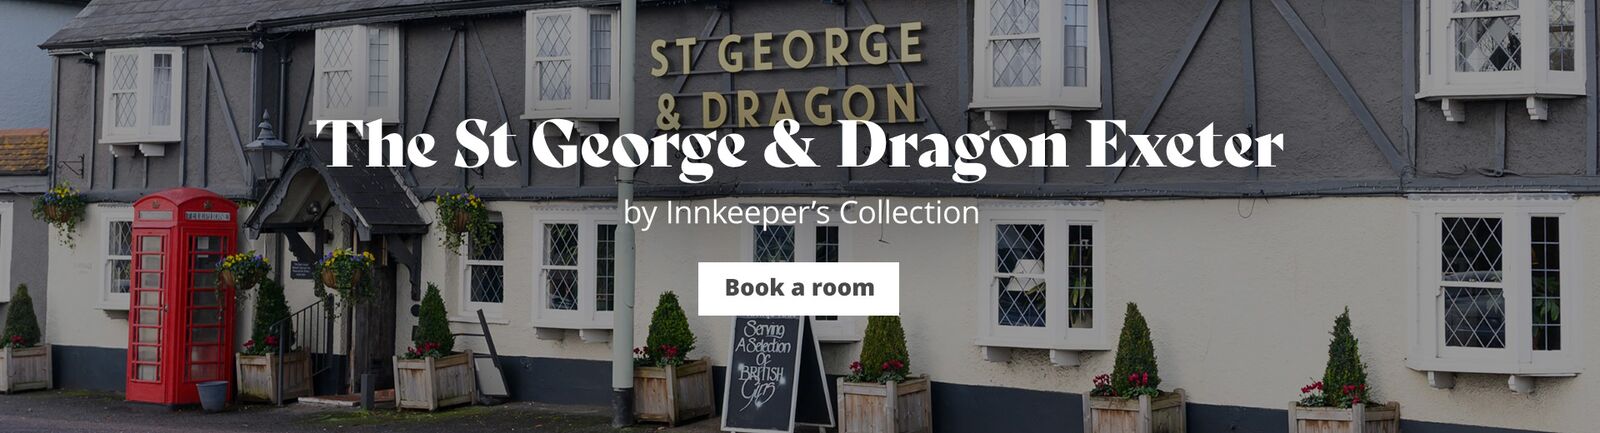 The St George & Dragon